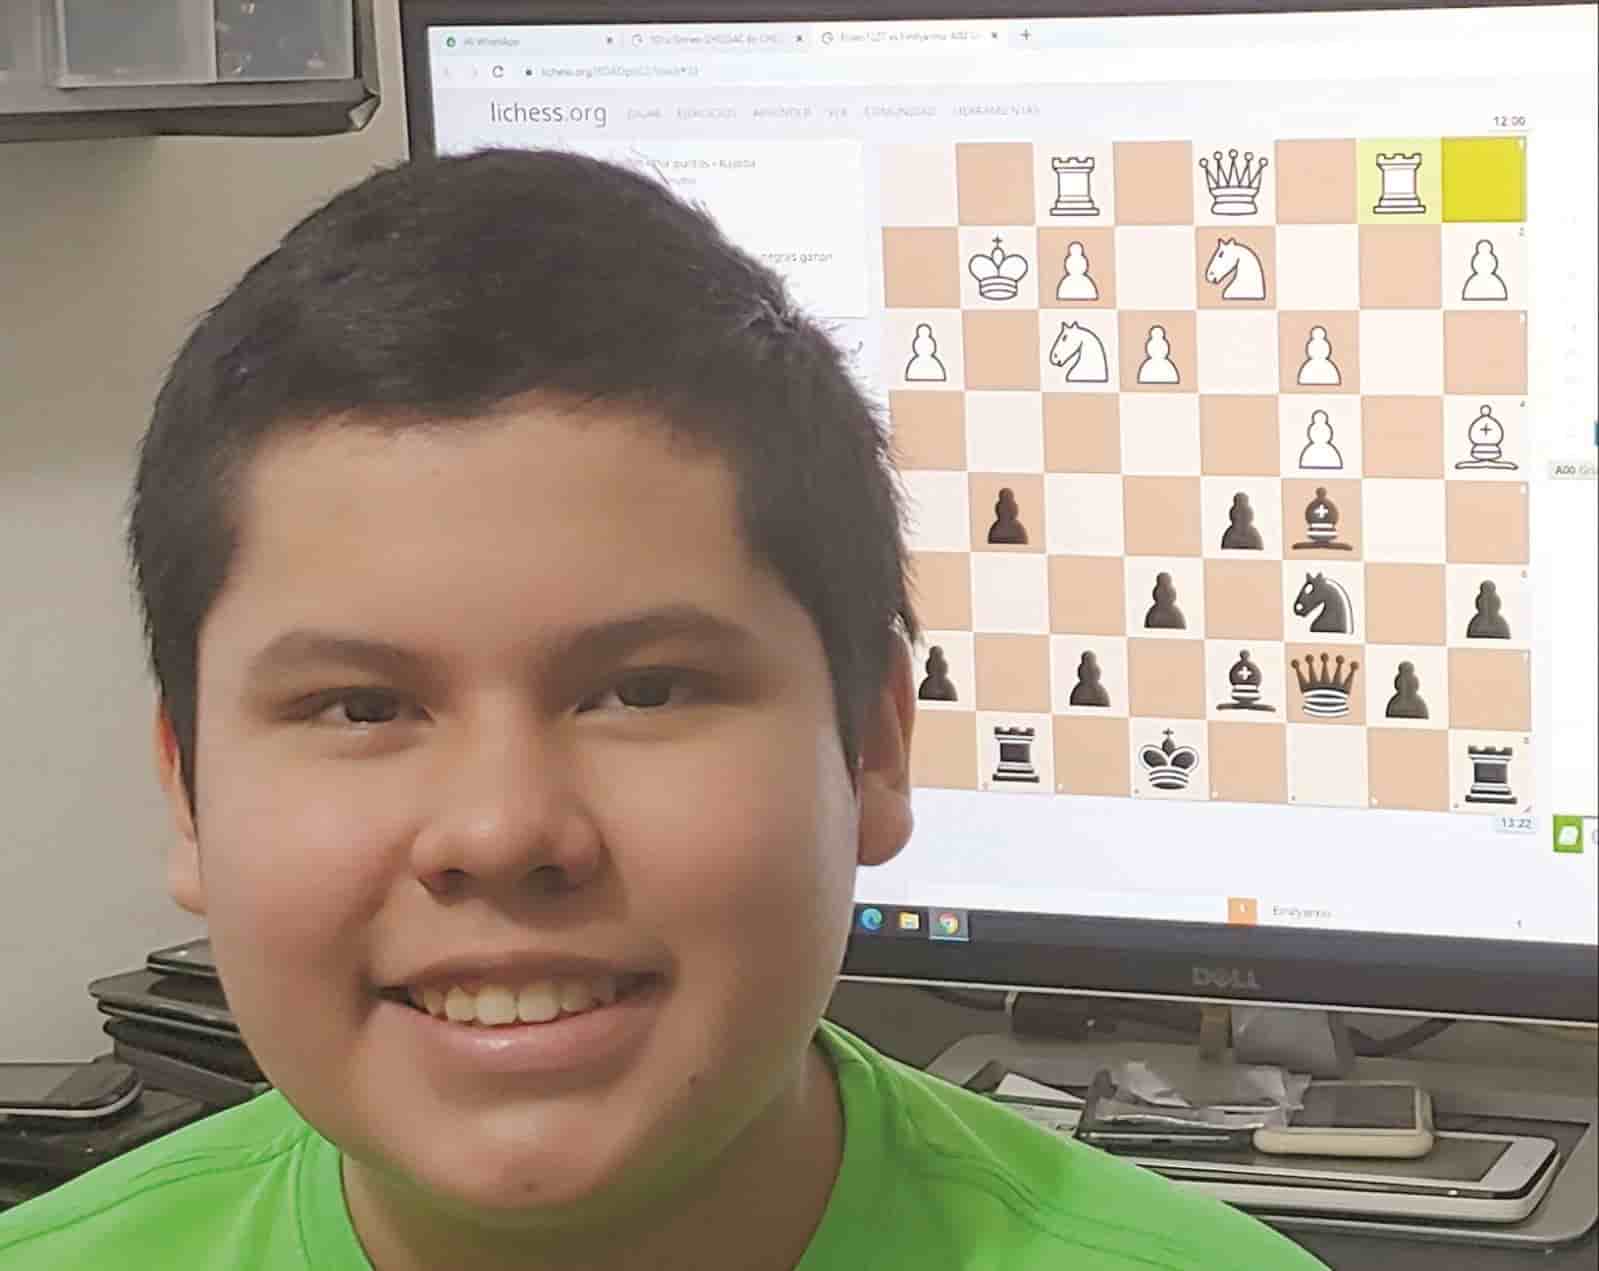 Torneo Chess AC de Ajedrez, completaron 104 torneos digitales